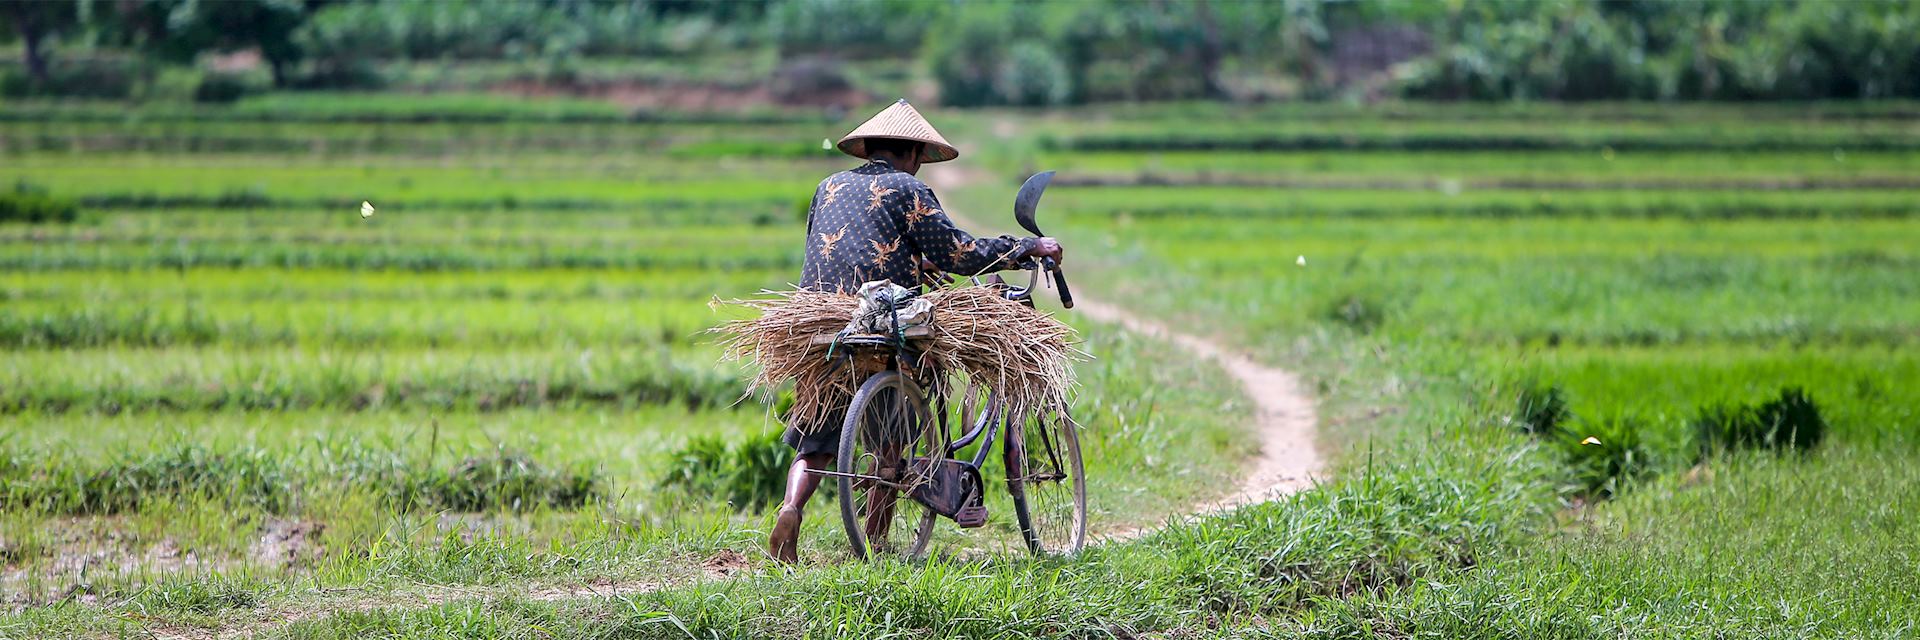 Farmer and his bike, Java